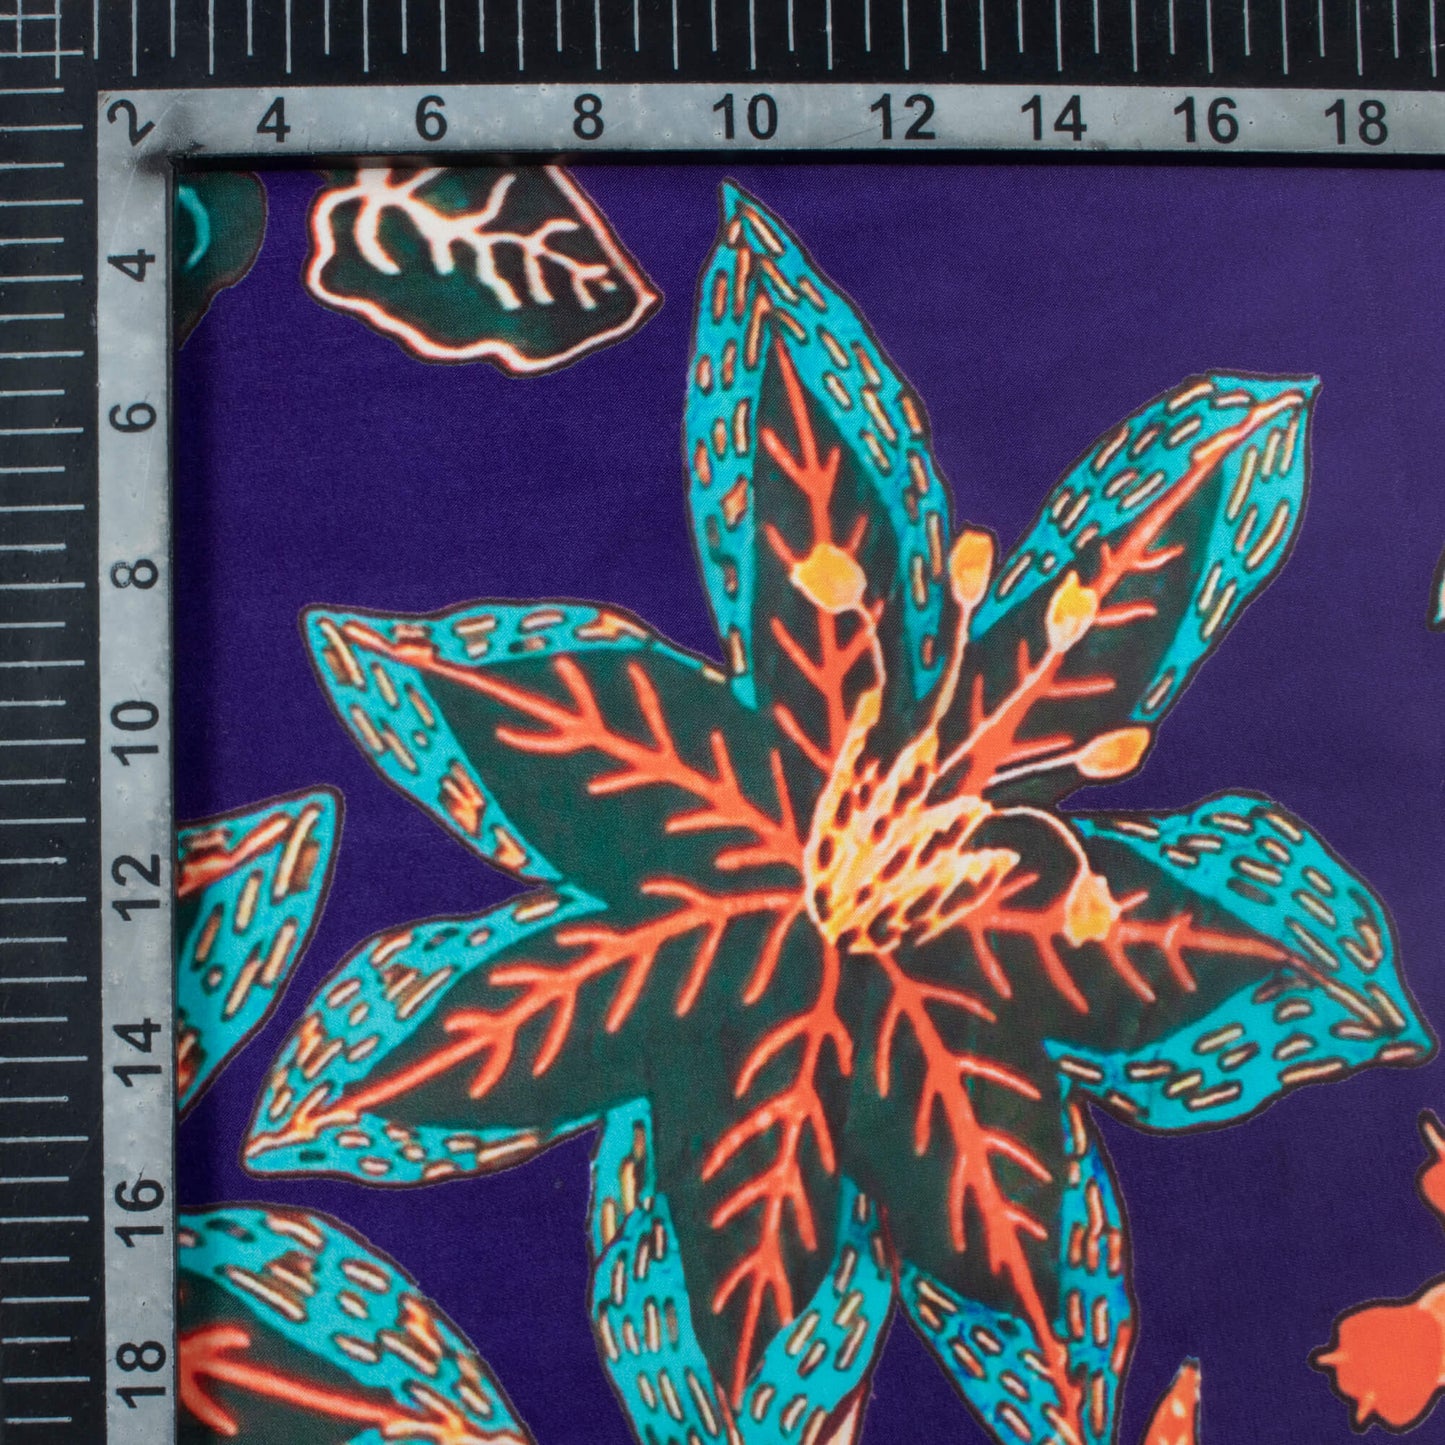 Navy Blue And Green Floral Pattern Digital Print Organza Satin Fabric